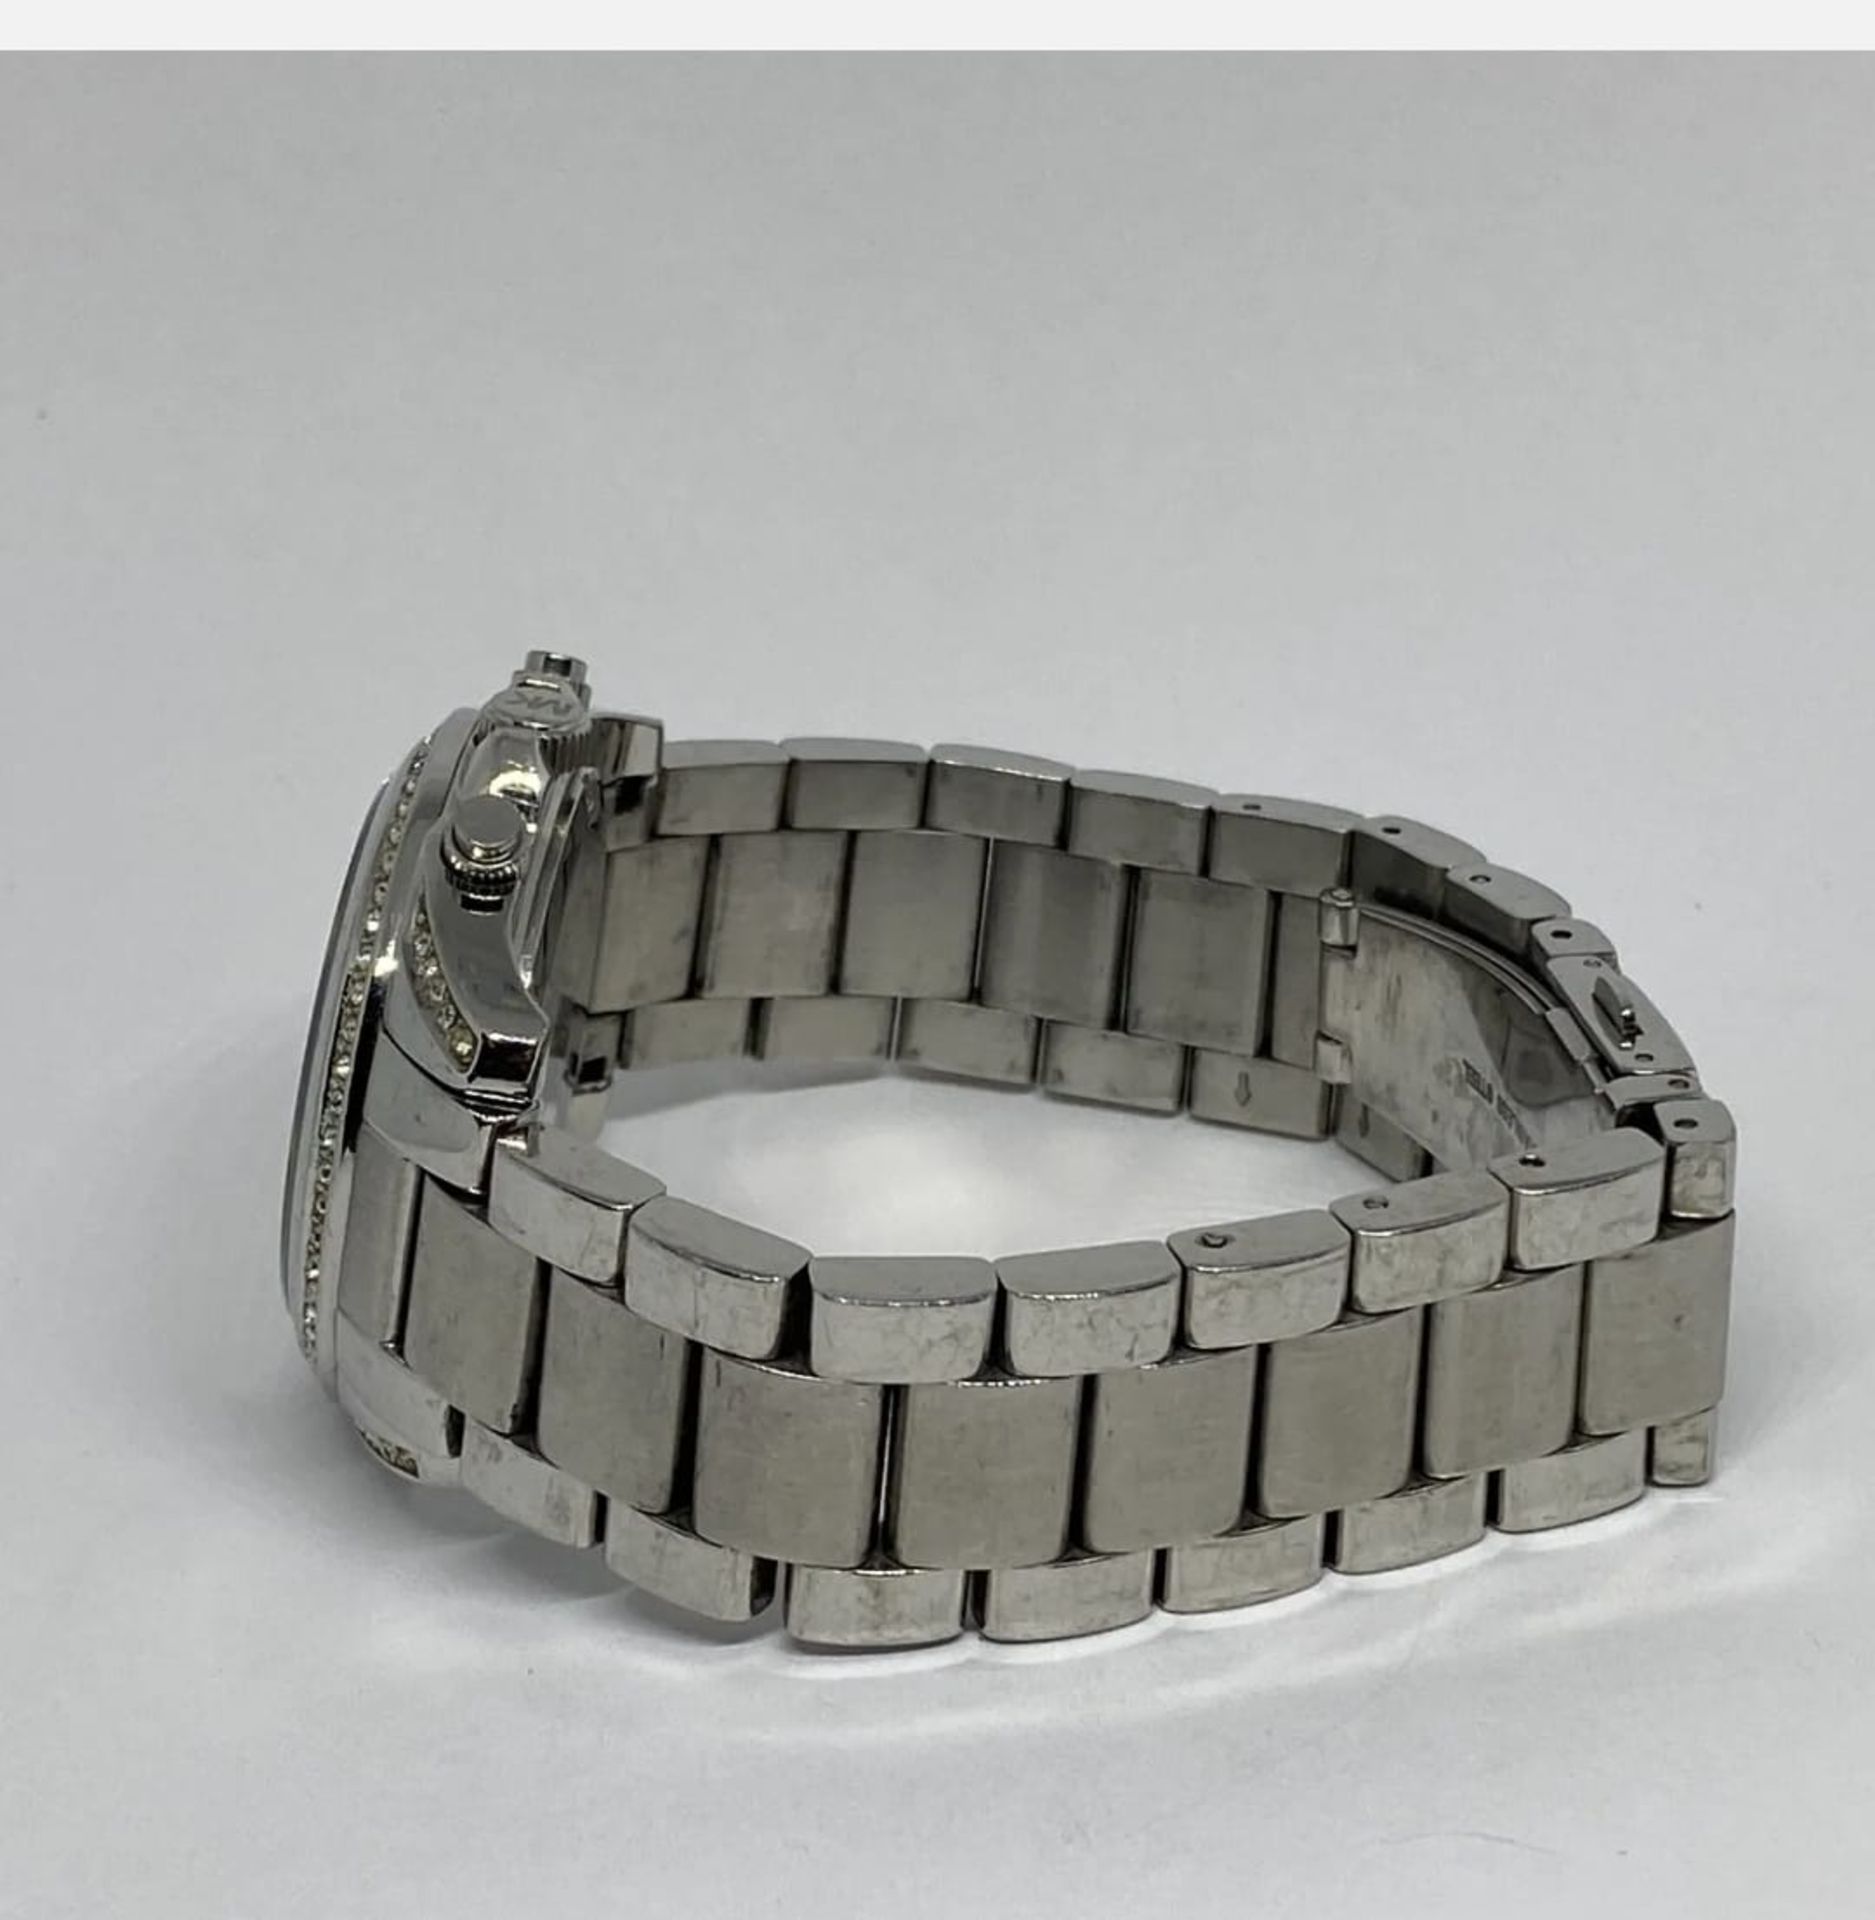 Michael Kors Mk5165 Women's Silver Bracelet Chronograph Quartz Watch - Image 2 of 6